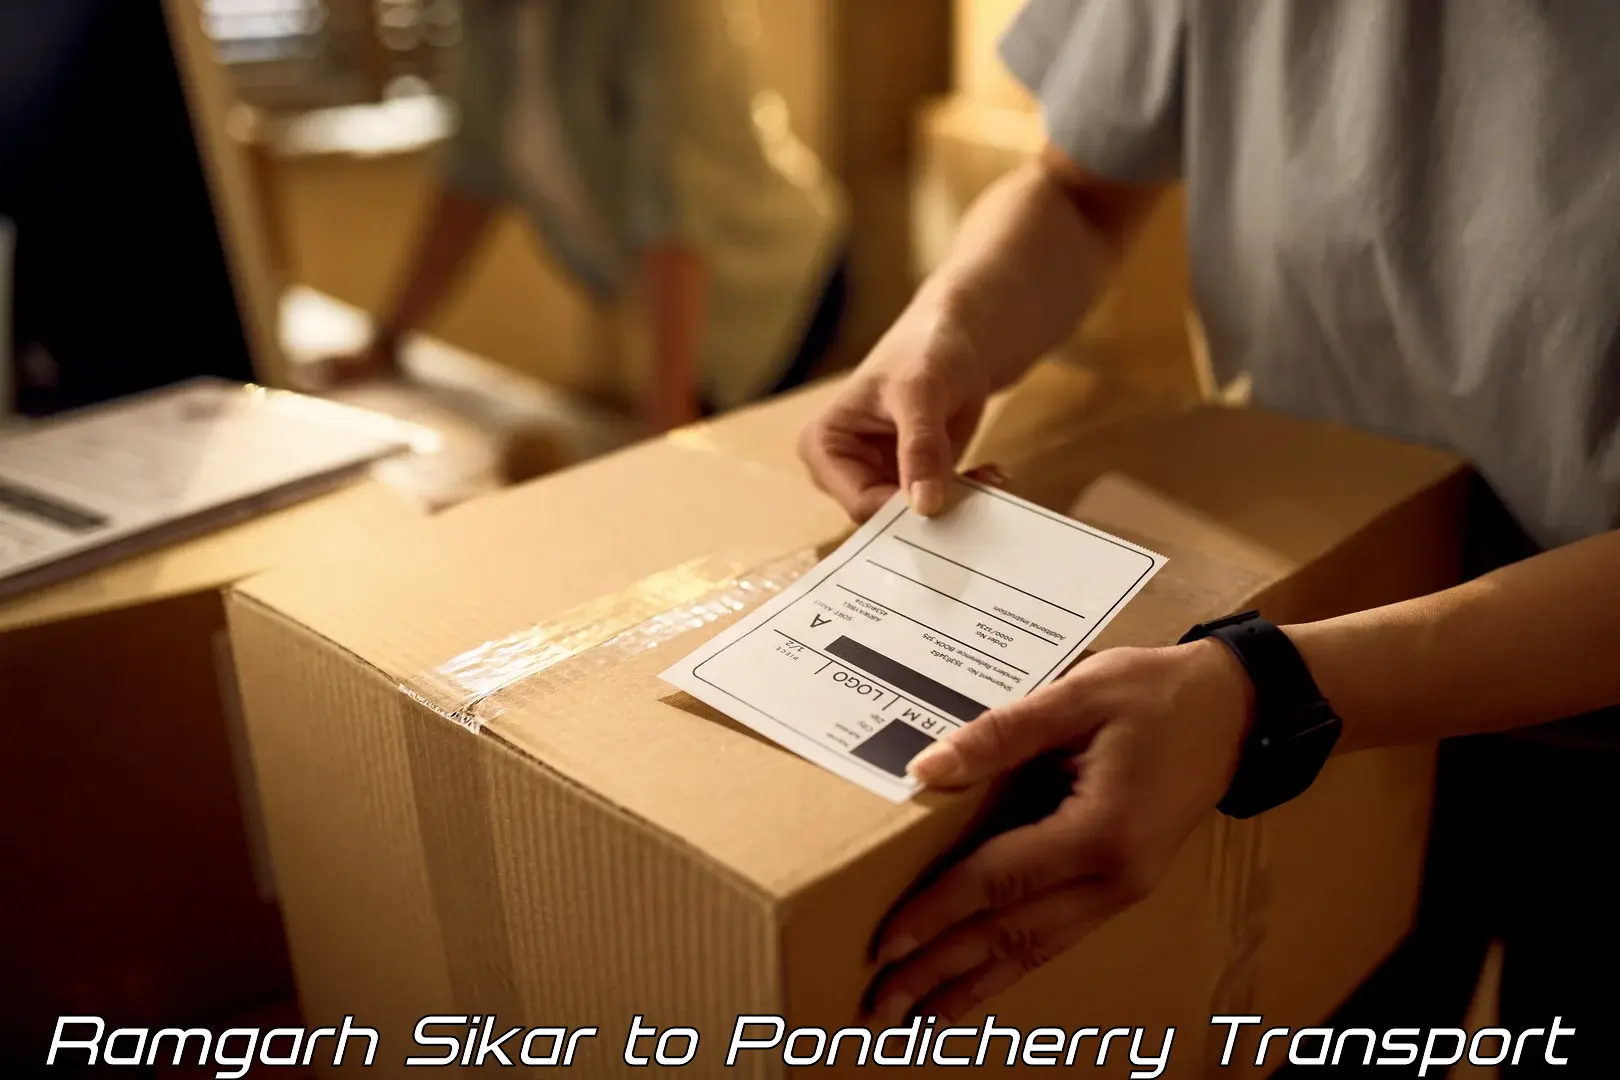 Furniture transport service Ramgarh Sikar to Karaikal